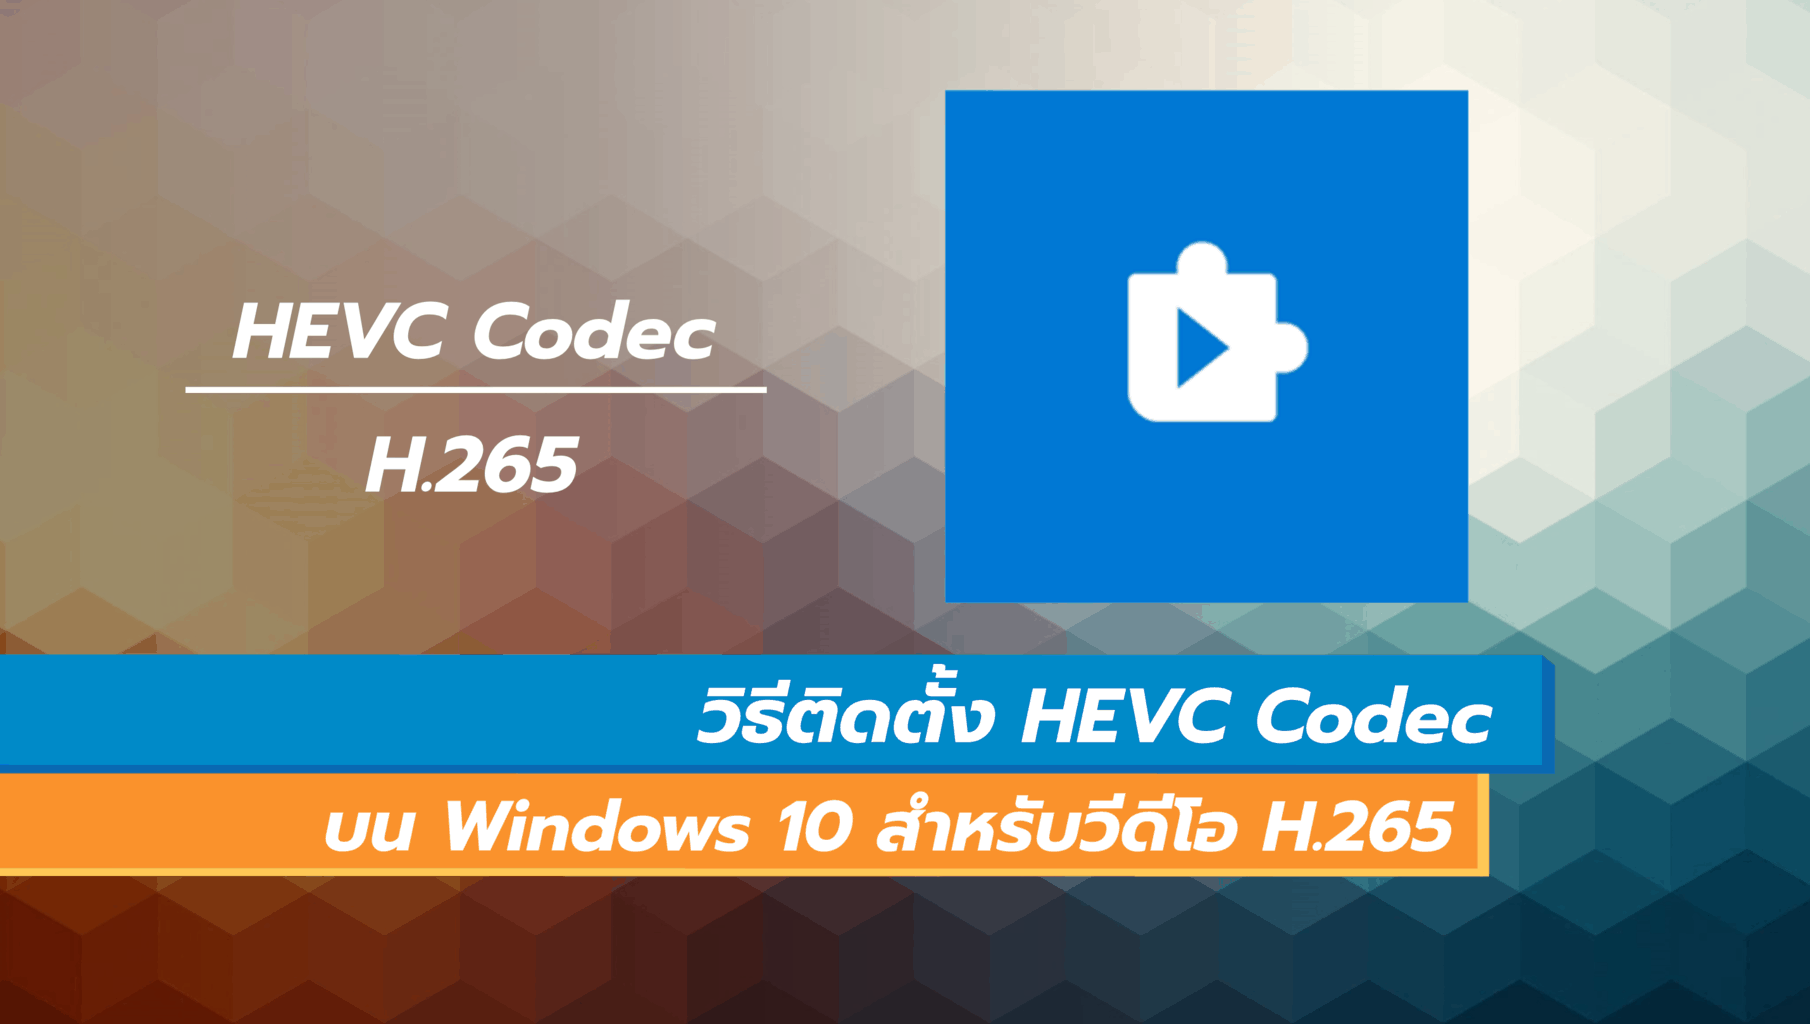 hevc codec windows 10 store free